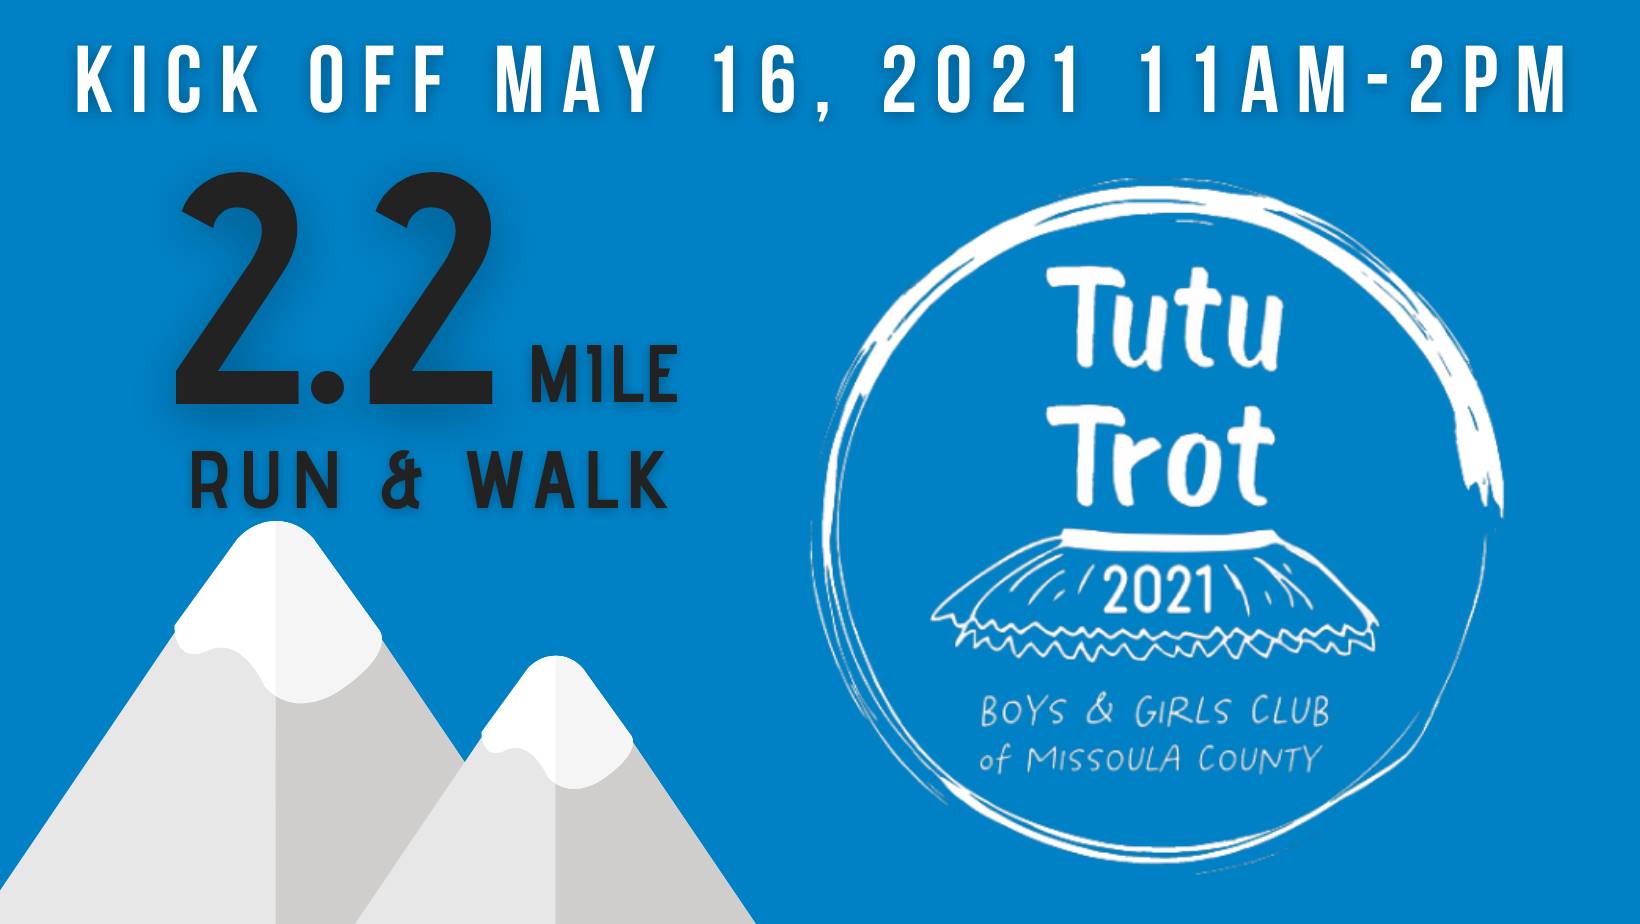 Tutu Trot, Sunday, May 16